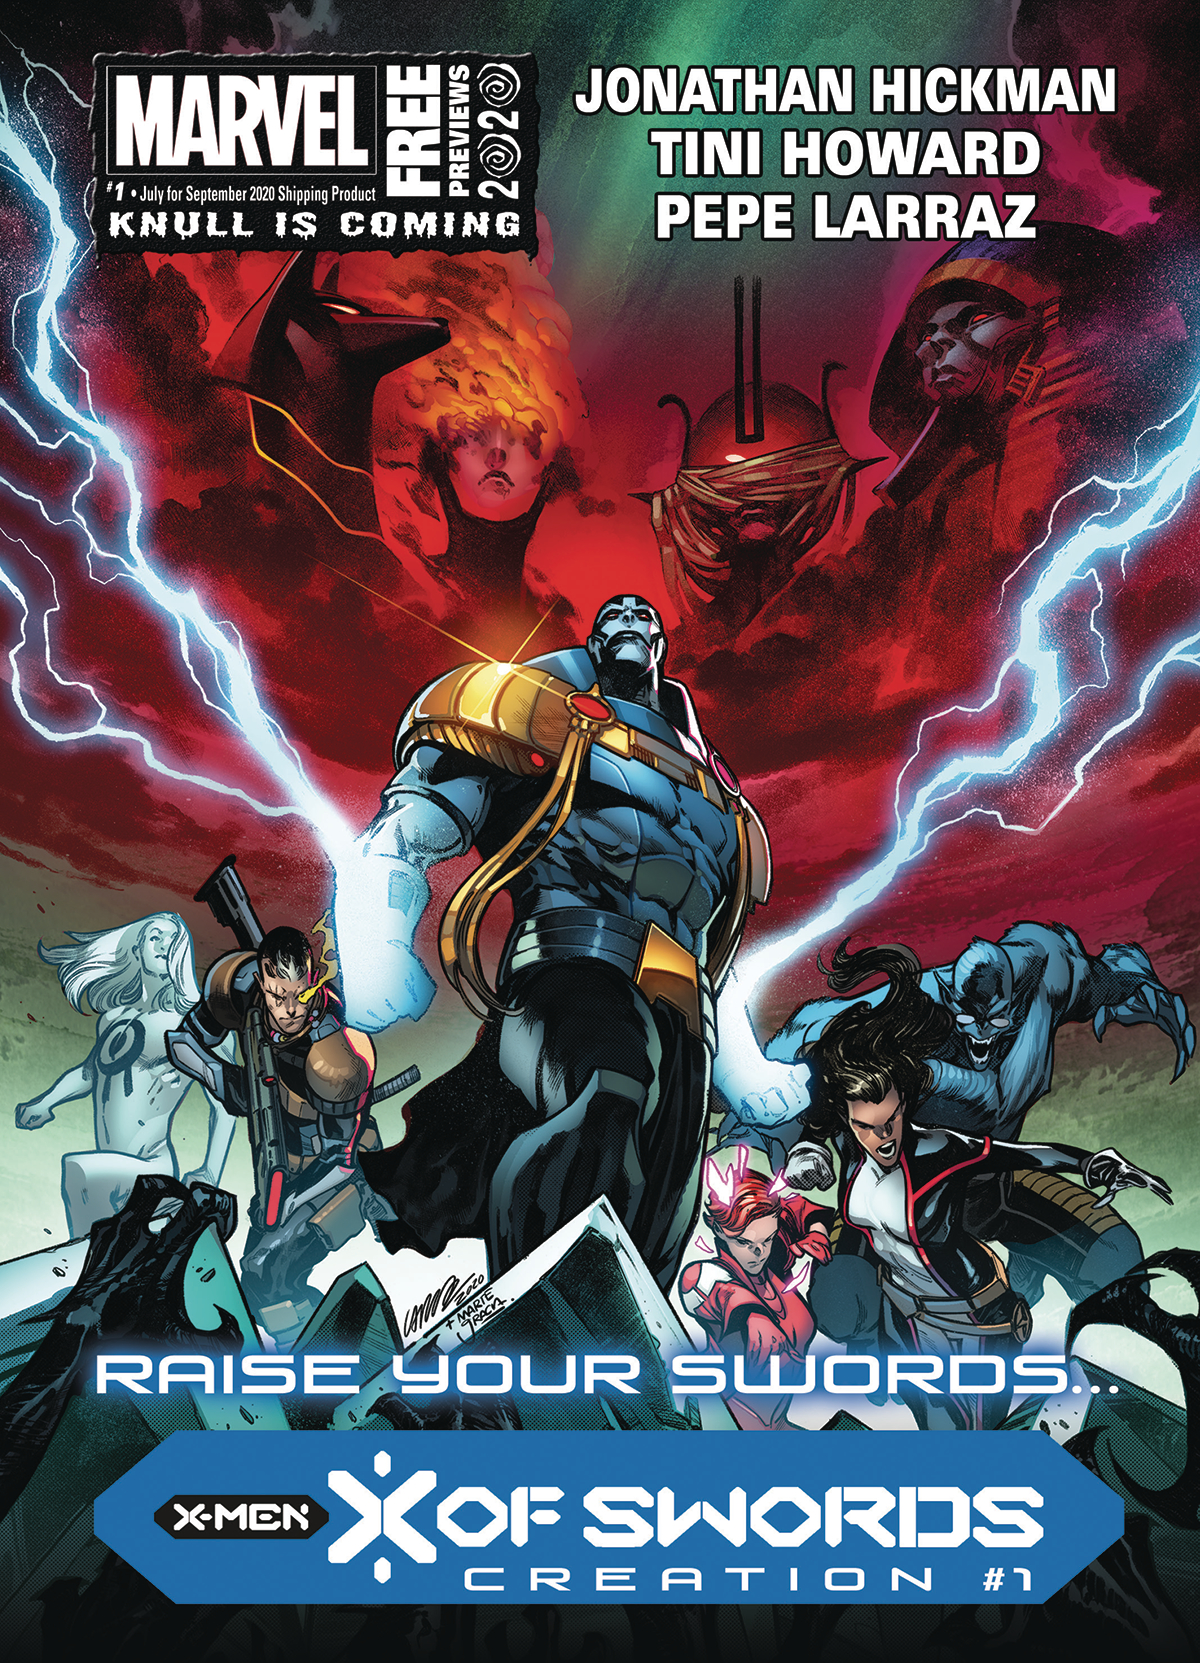 Marvel Previews Volume 5 #3 September 2020 Extras #204